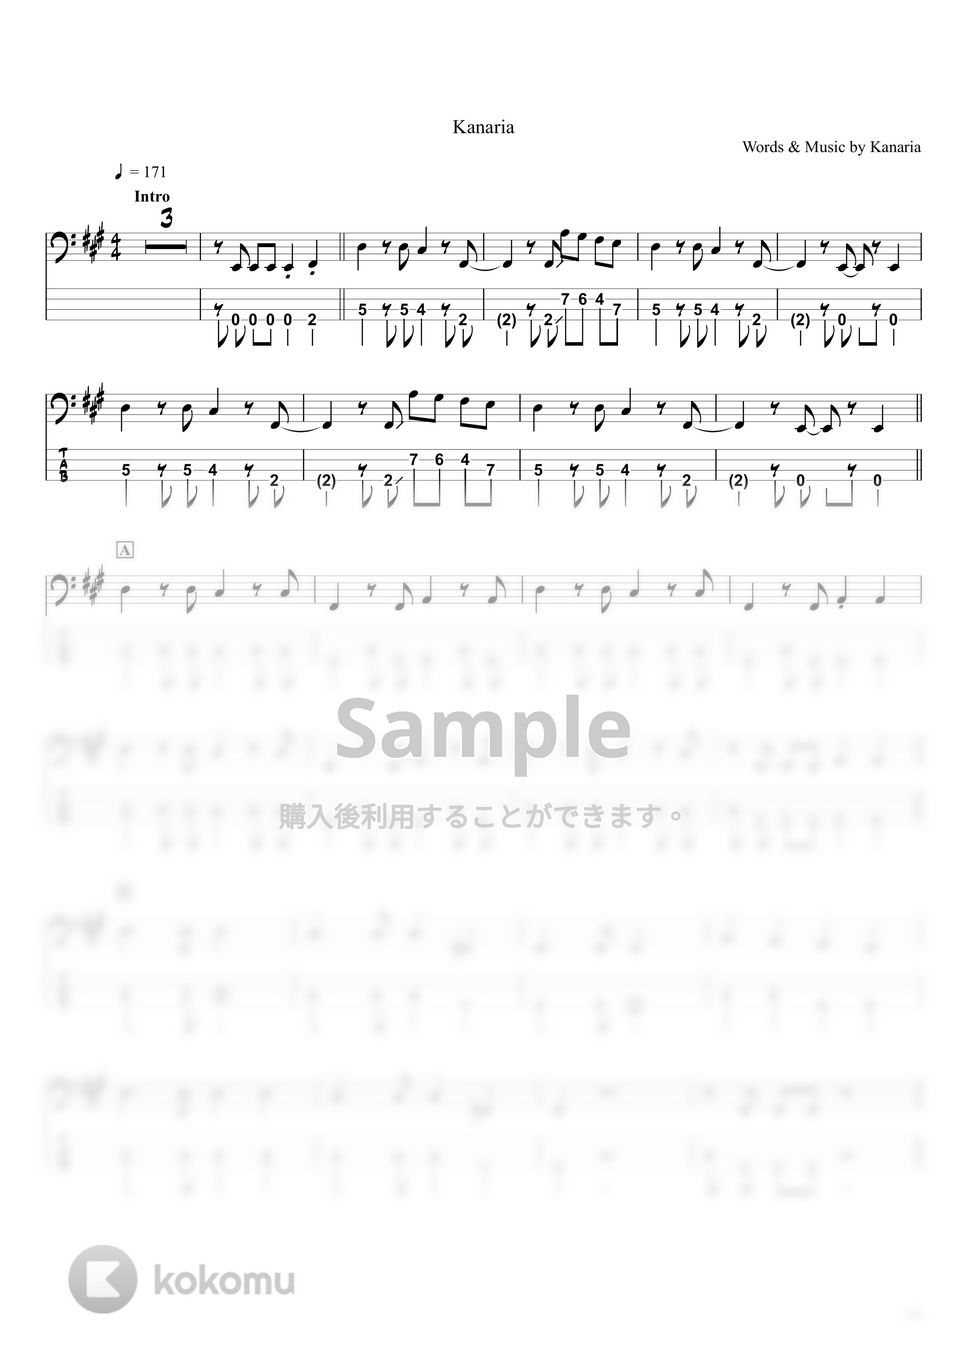 Kanaria - エンヴィーベイビー (ベースTAB譜☆4弦ベース対応) by swbass